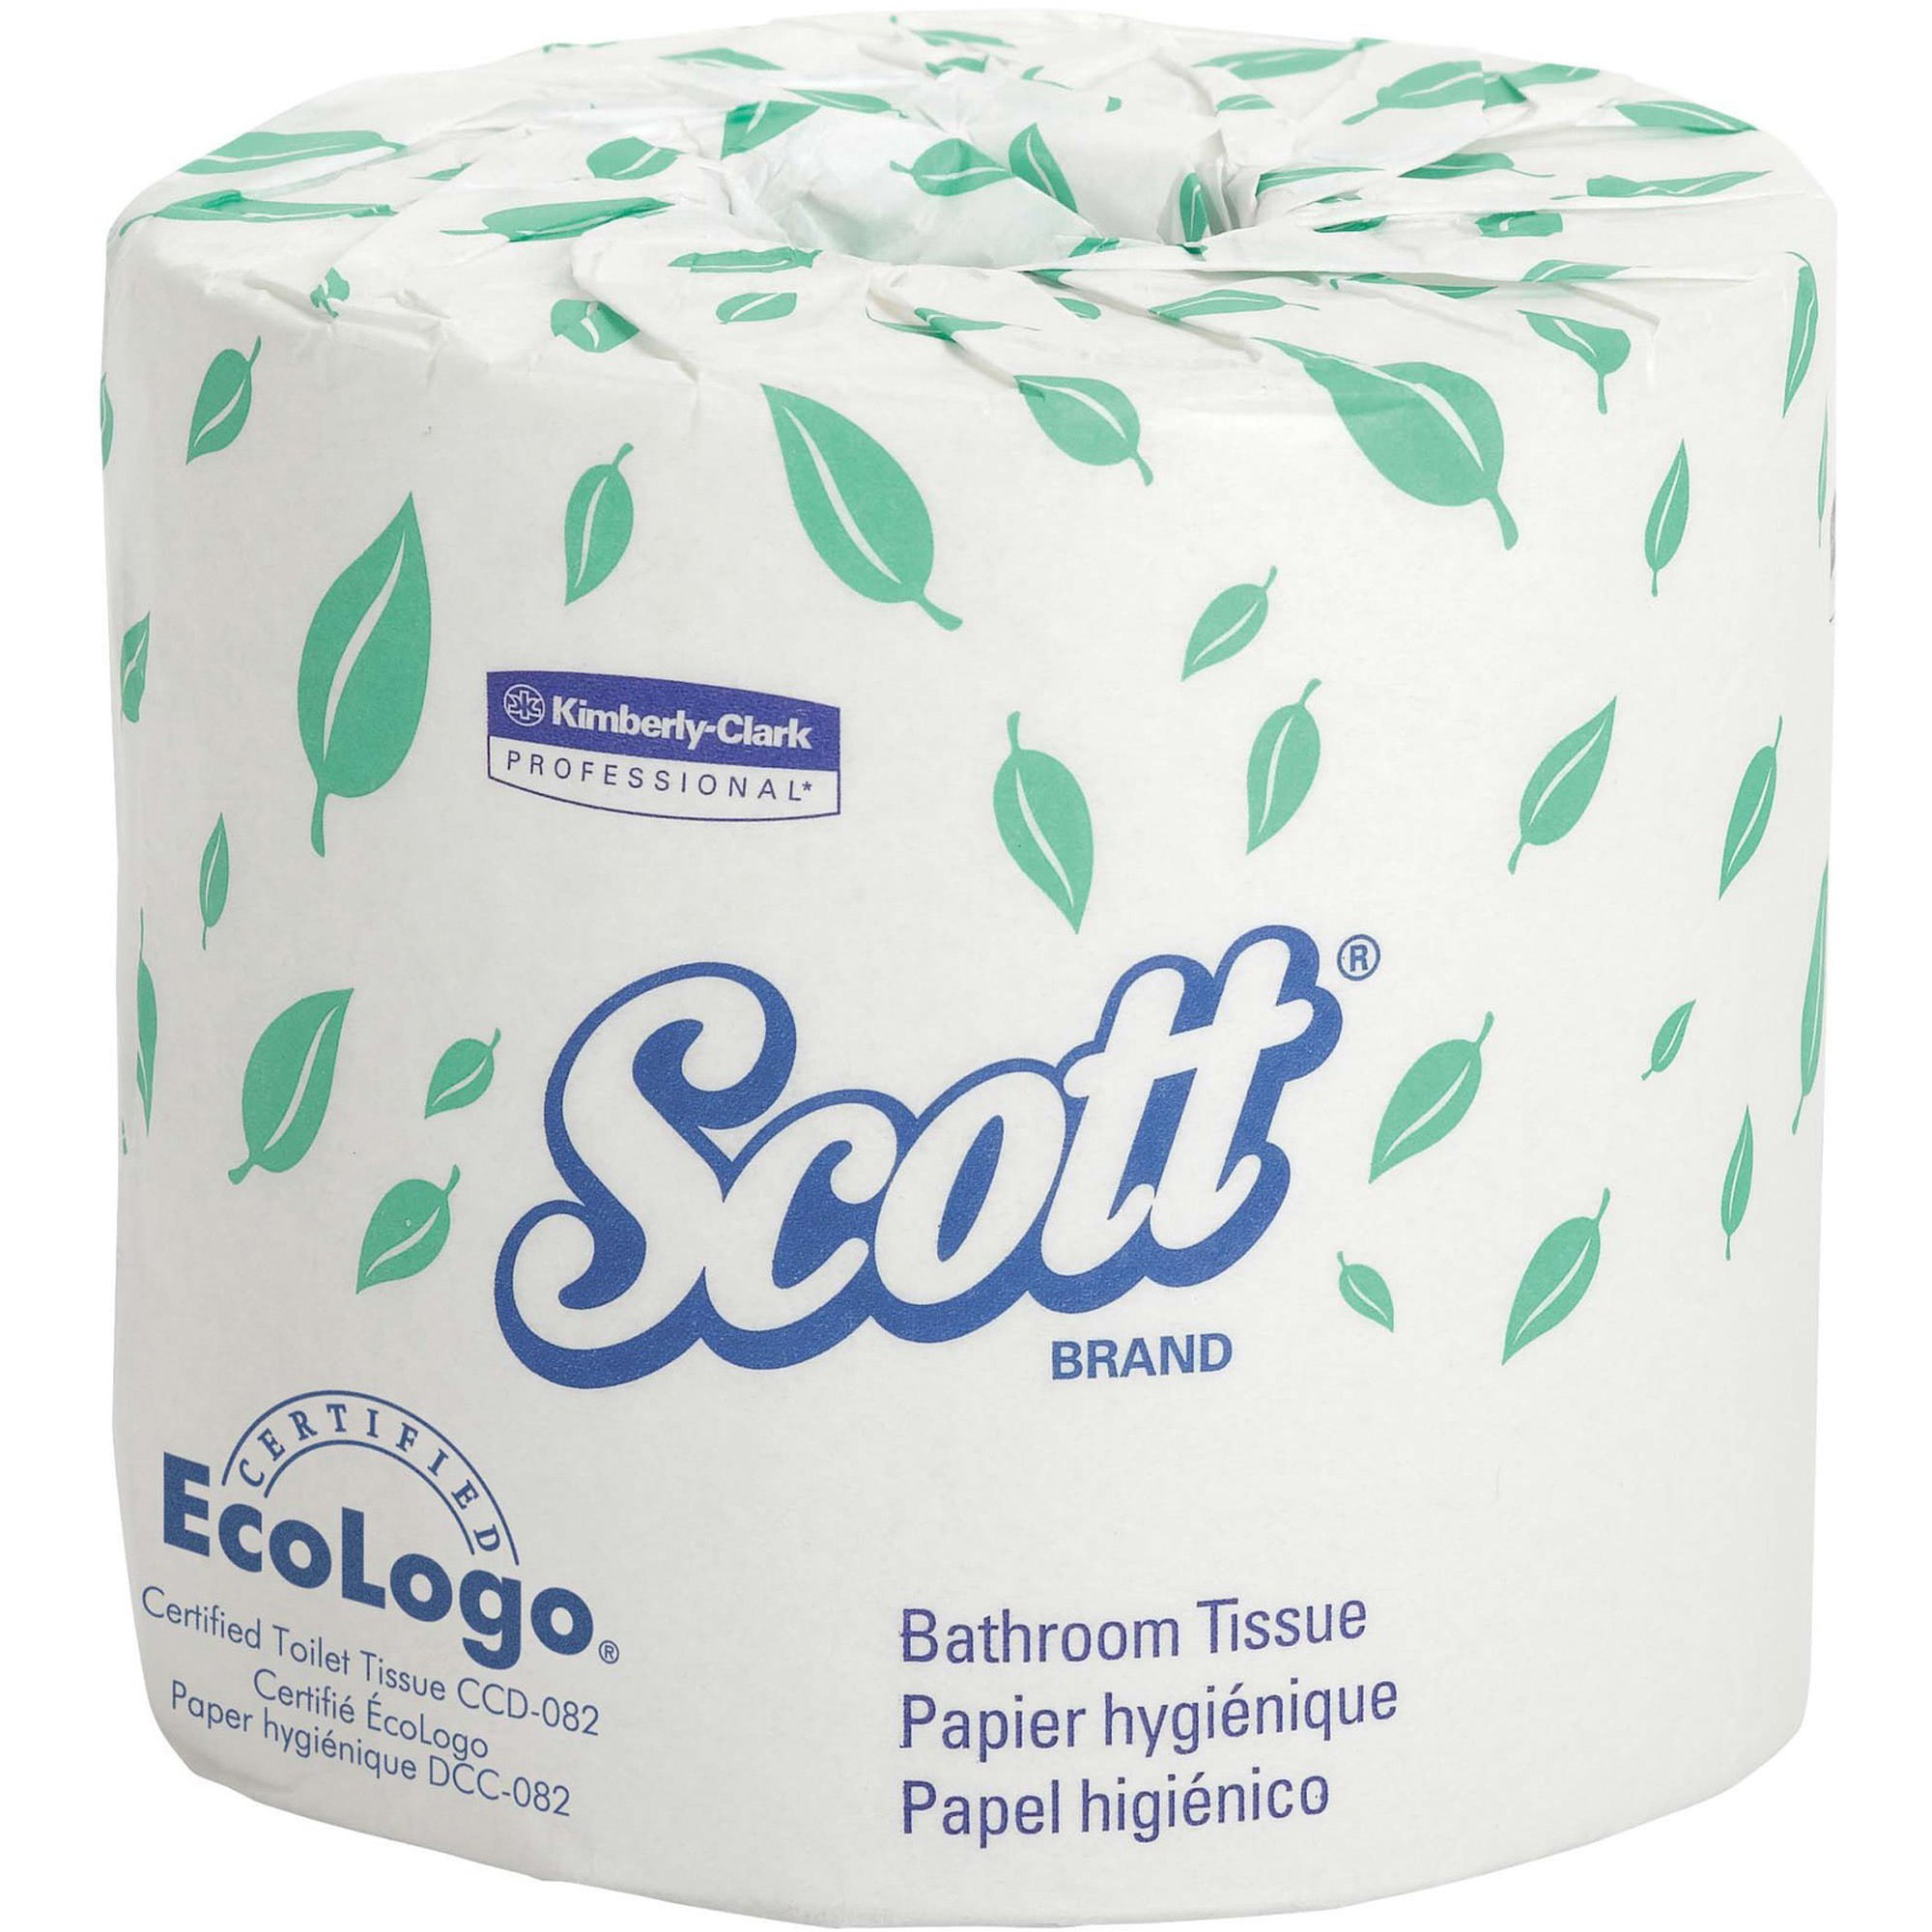 My Softness Bathroom Tissue 2ply 20 rolls